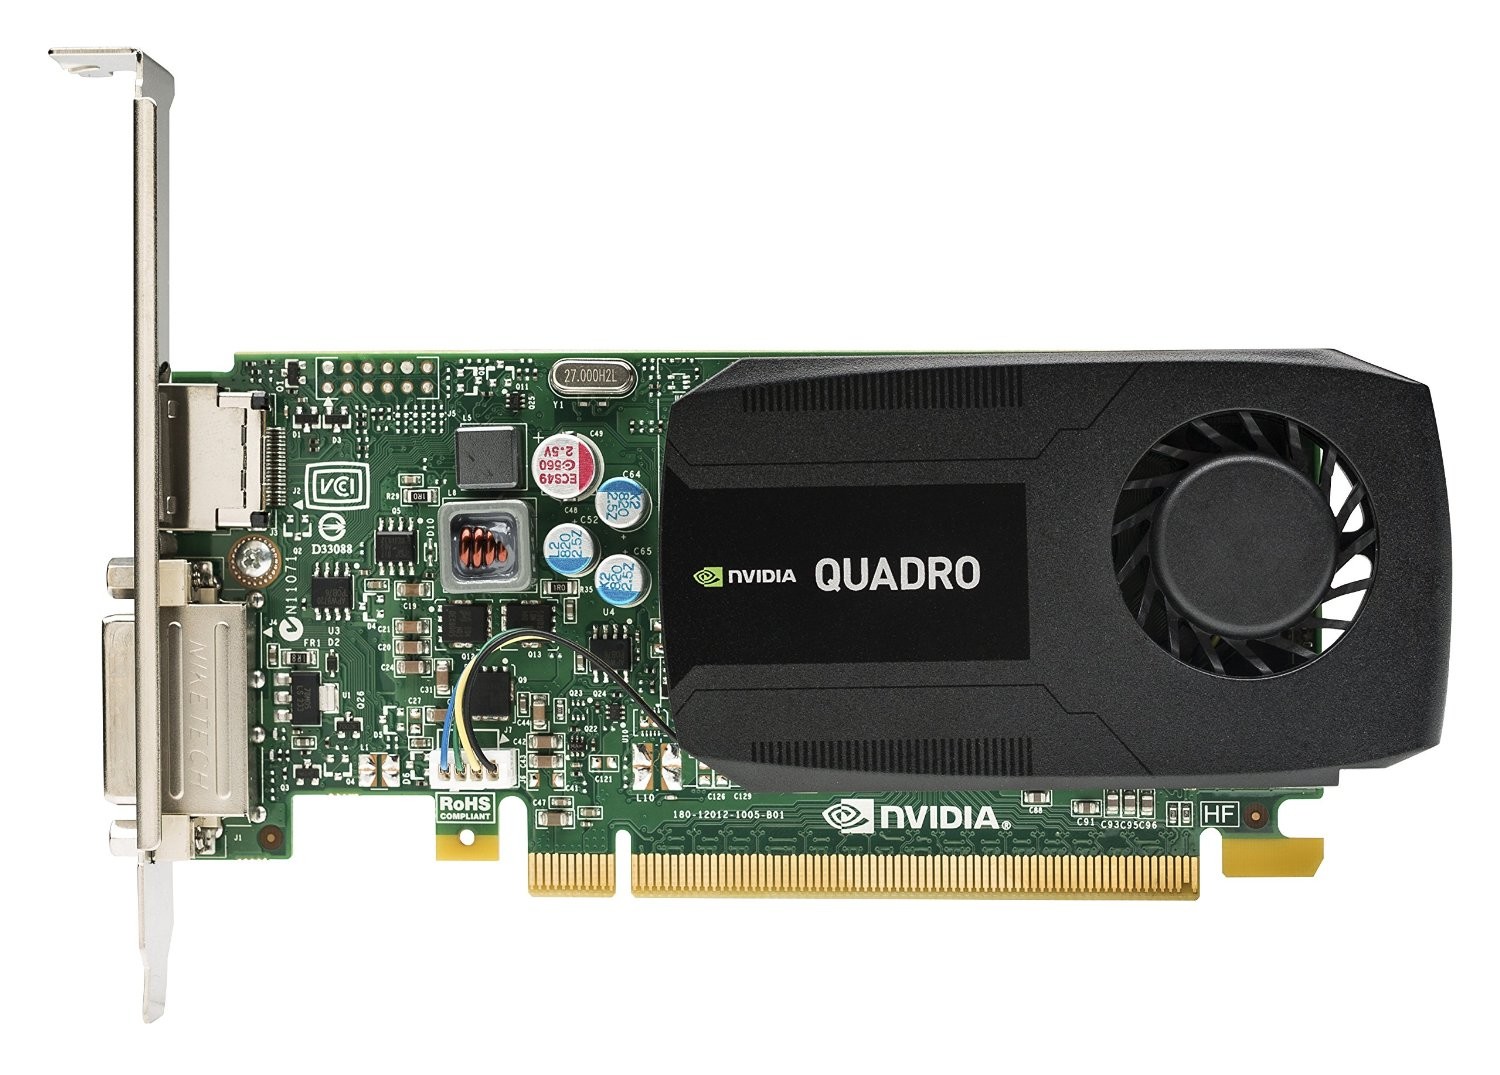 2GB nVIDIA Quadro K420 GDDR3 DVI-I Display Port PCI Express 2.0 x16 Graphic Card 4X60K59925